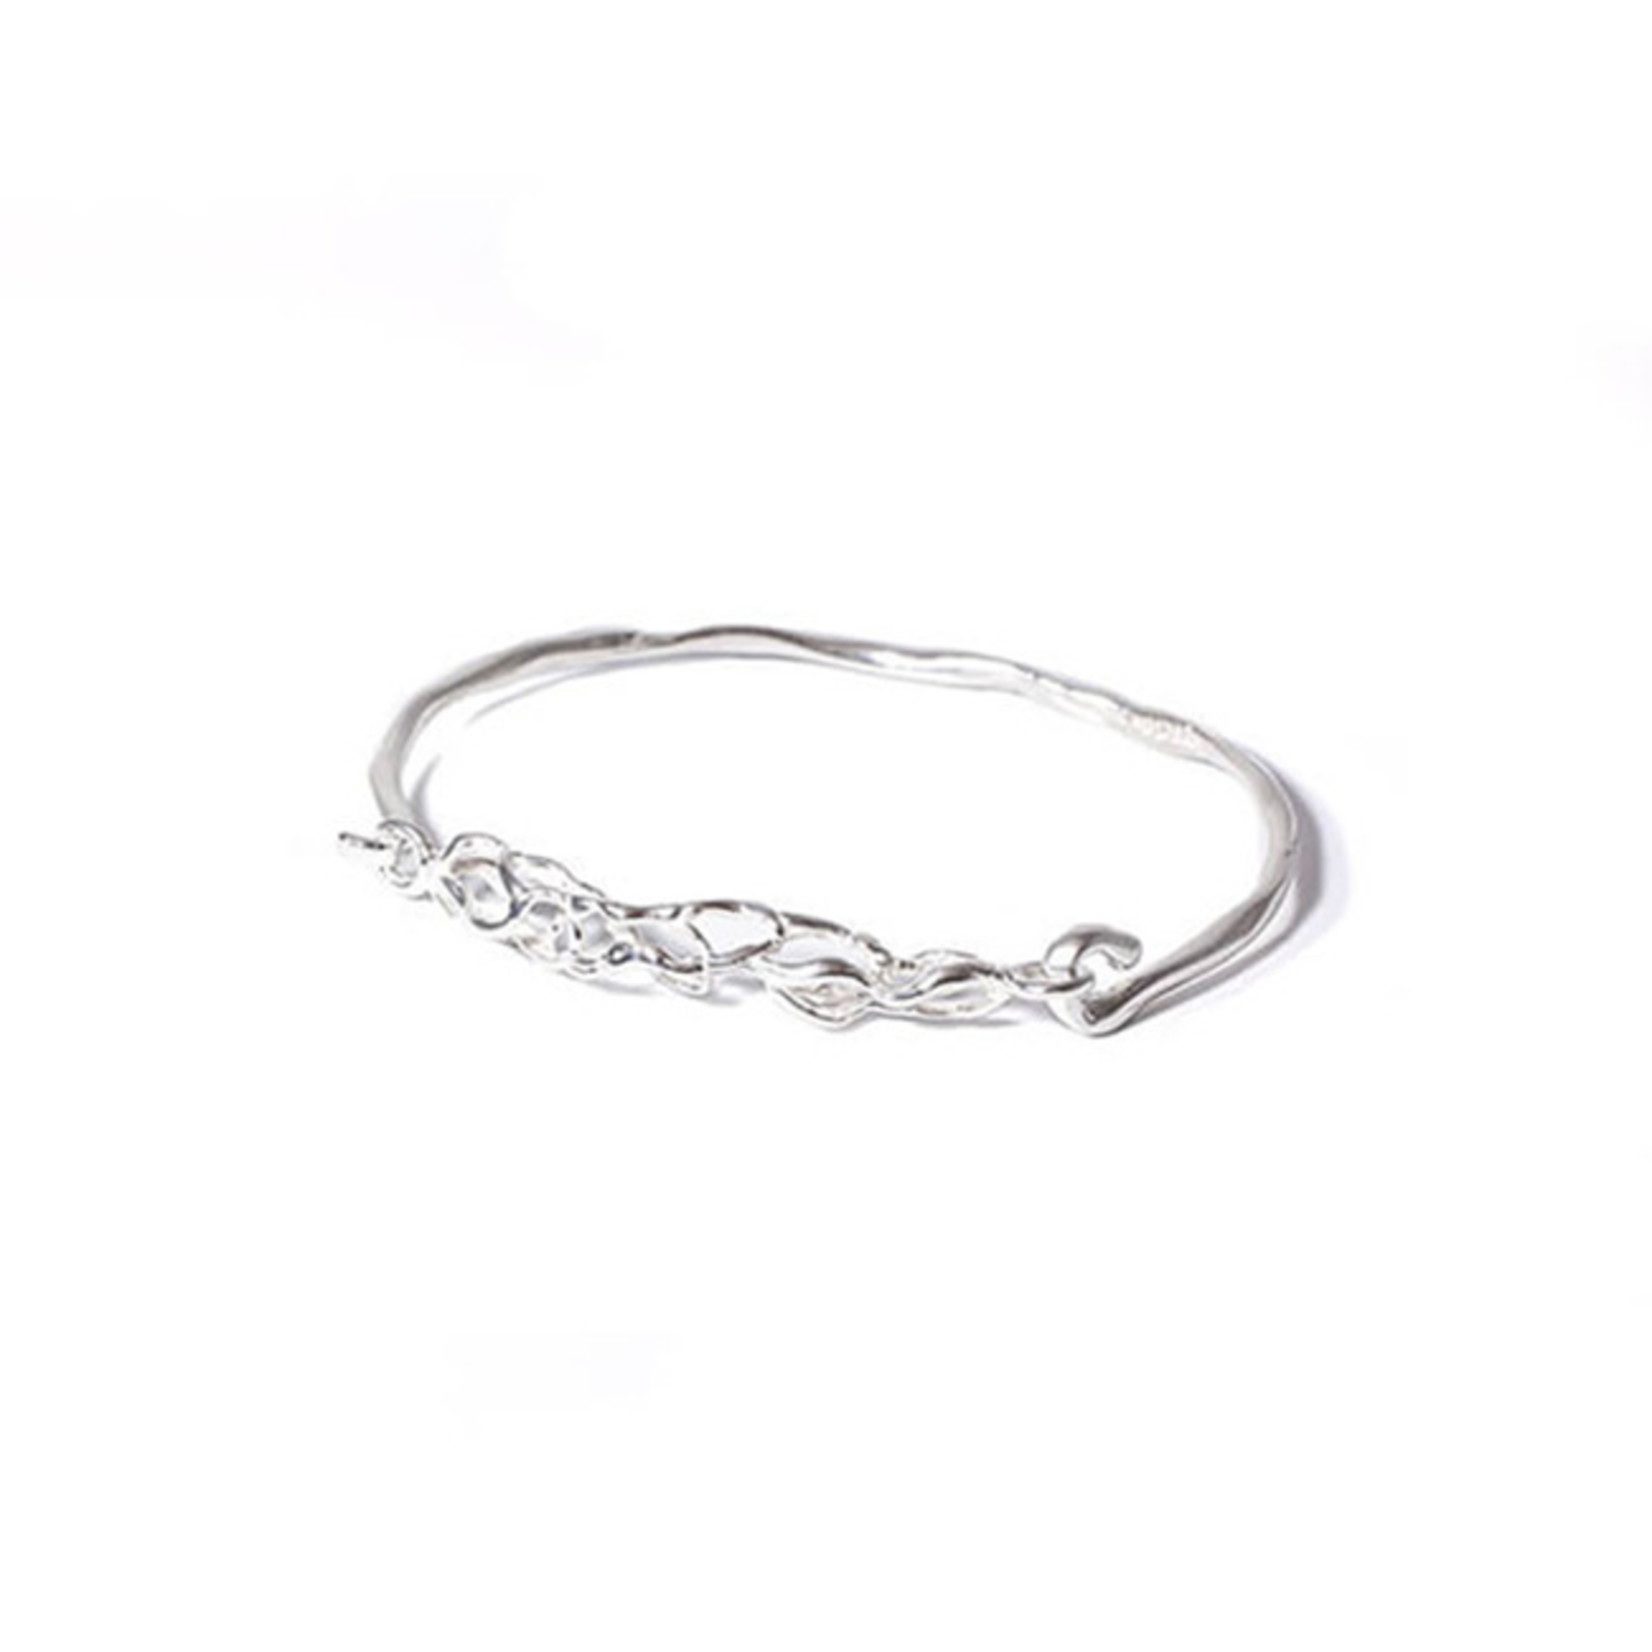 TEGO Liquid silver band bracelet